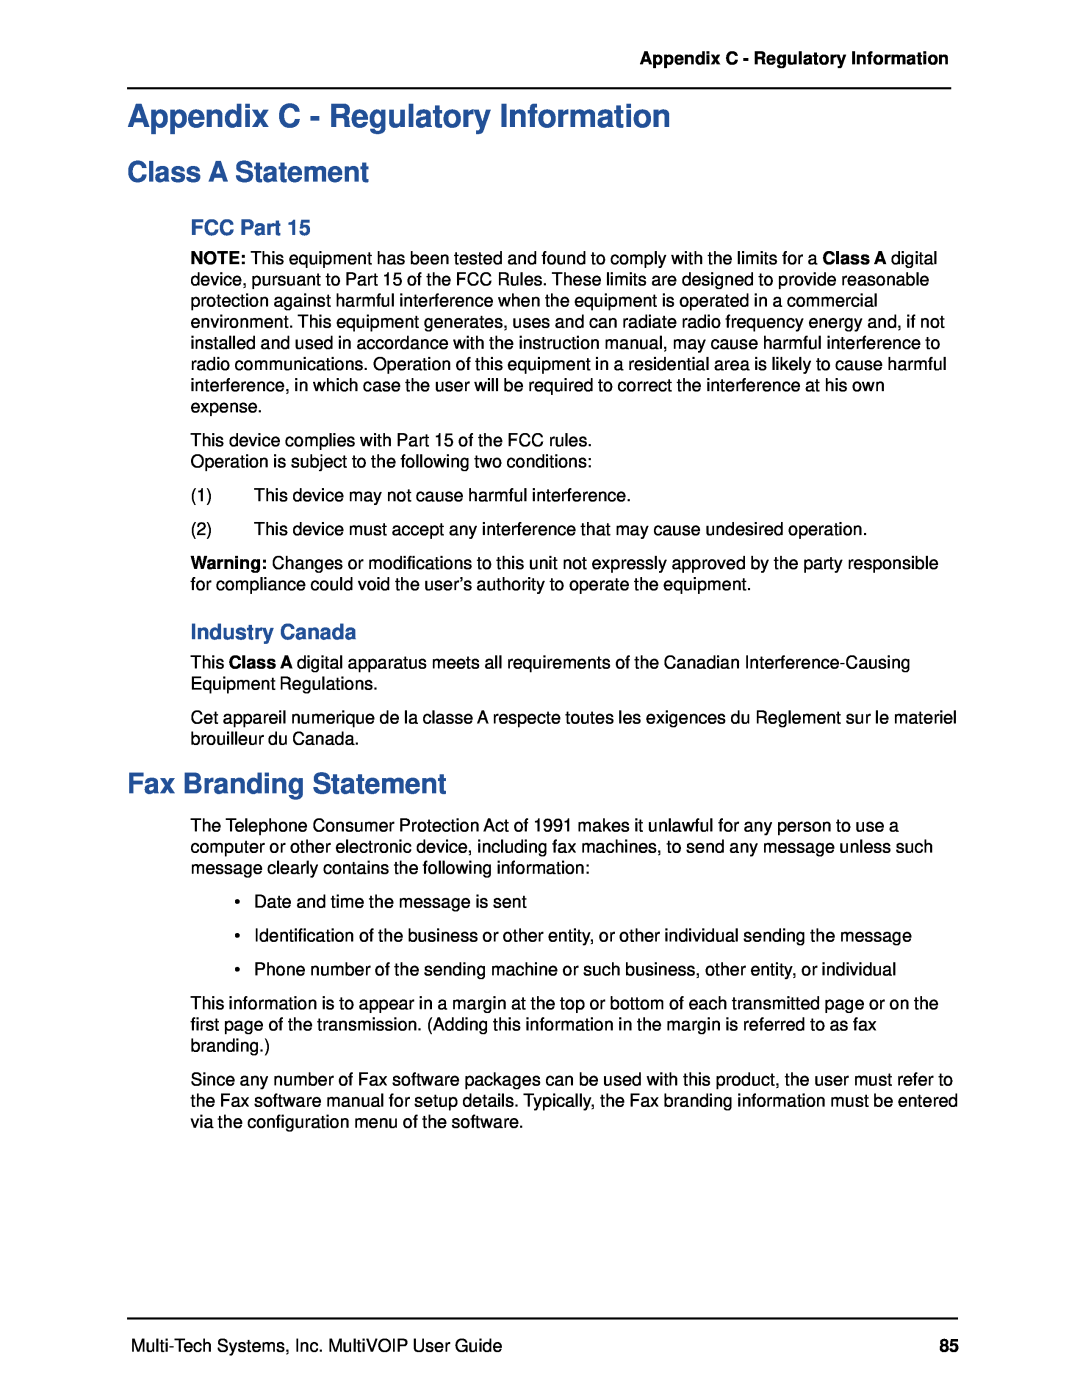 Multi-Tech Systems MVP120 manual Appendix C - Regulatory Information, Class A Statement, Fax Branding Statement, FCC Part 